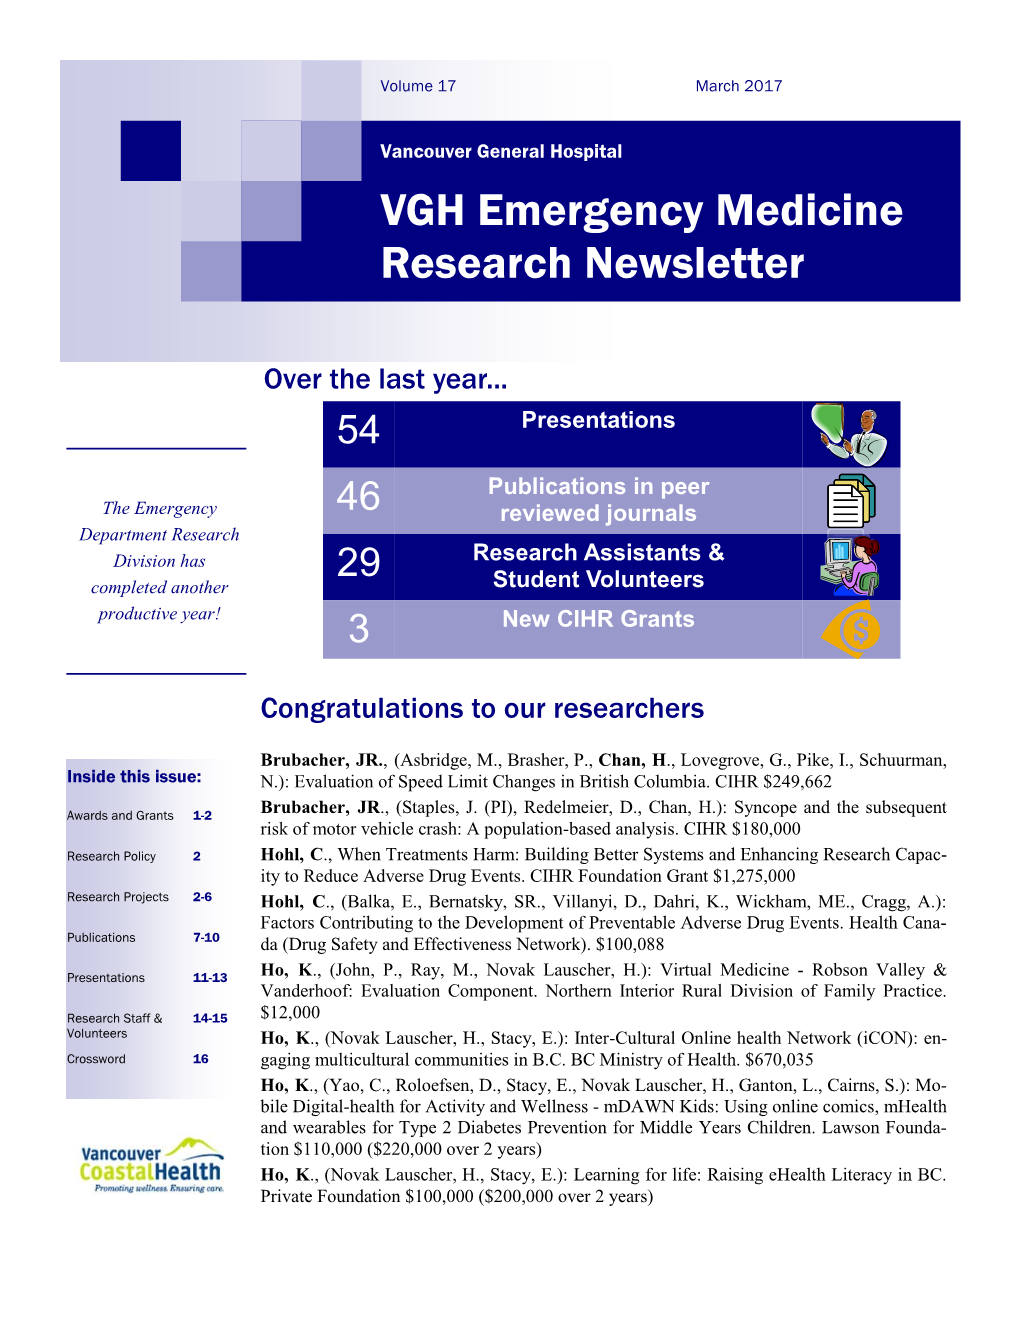 VGH Emergency Medicine Research Newsletter